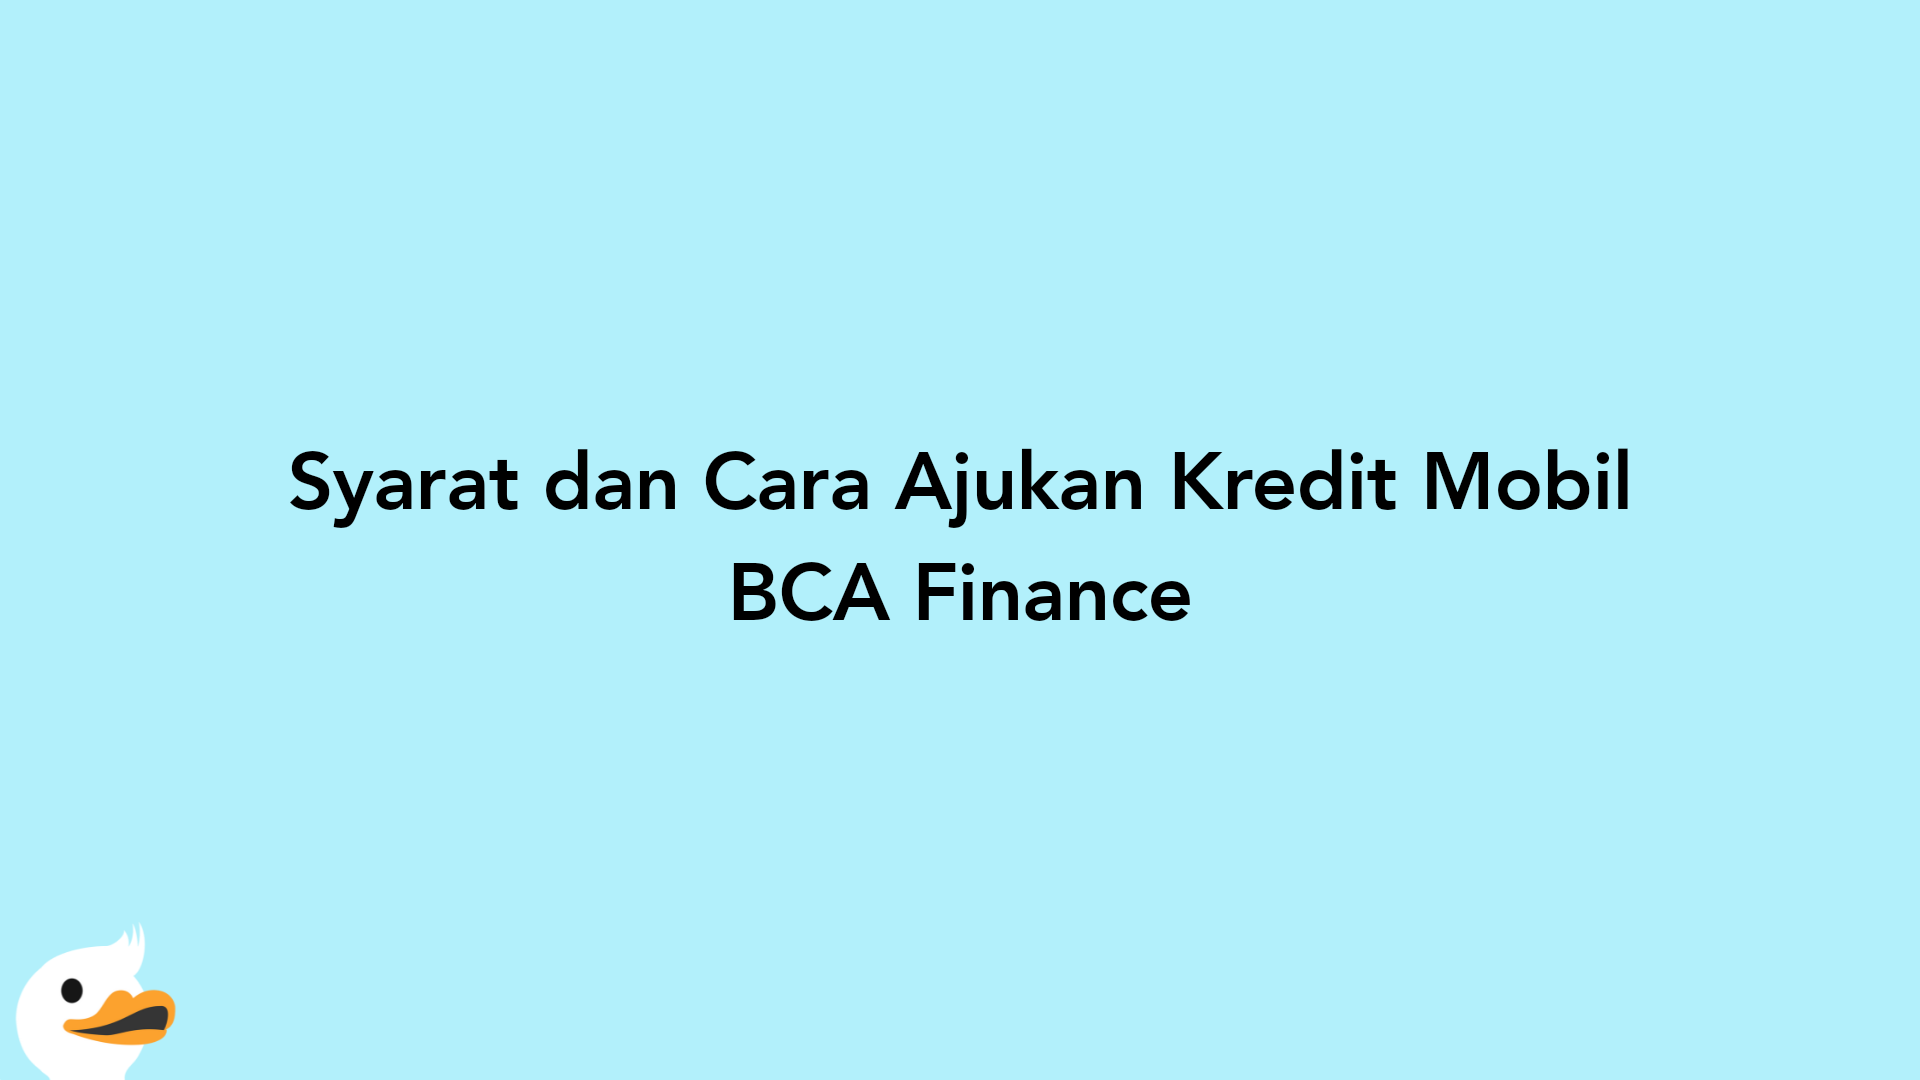 Syarat dan Cara Ajukan Kredit Mobil BCA Finance